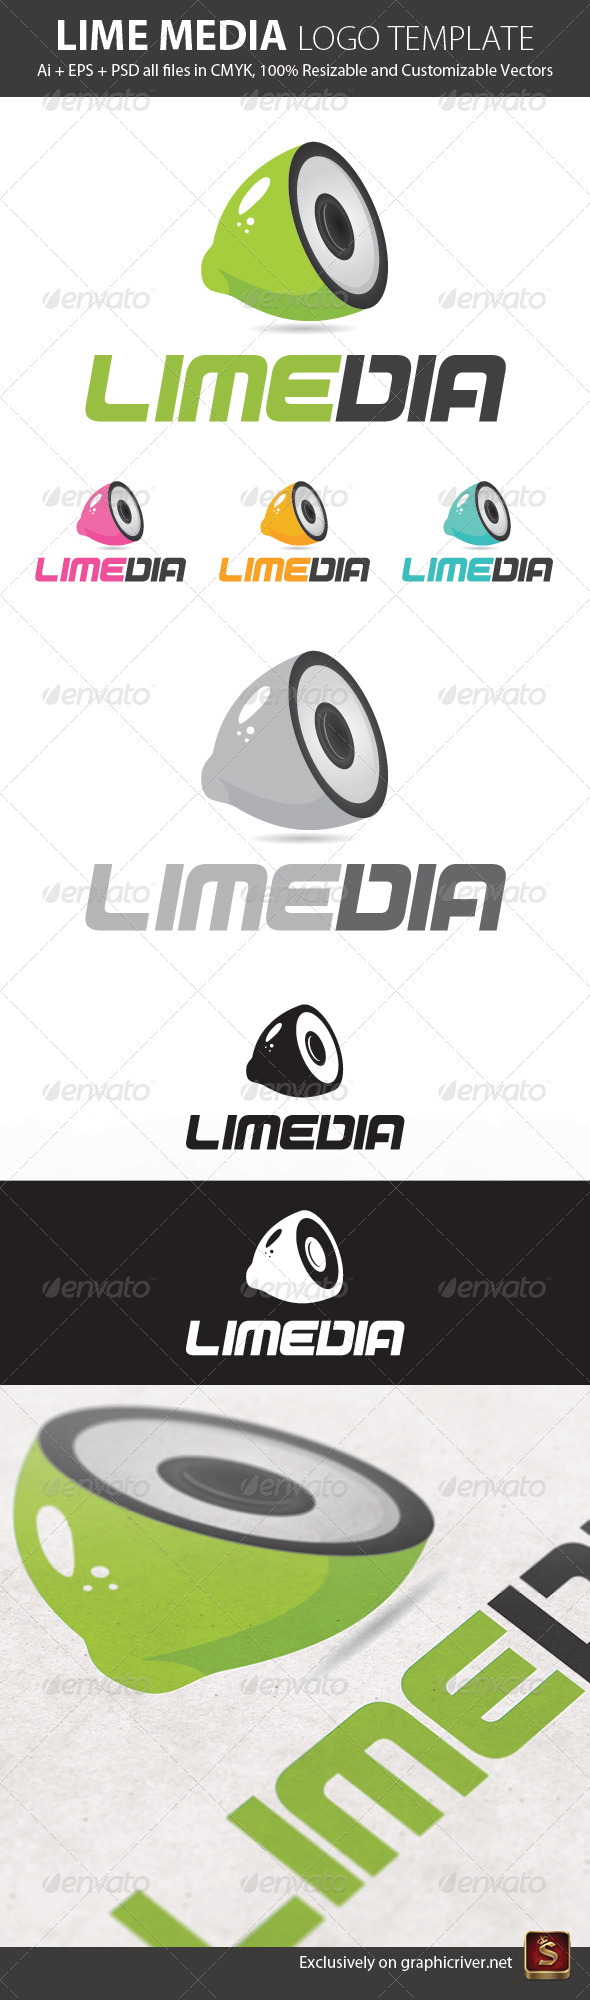 Lime Media Logo Template